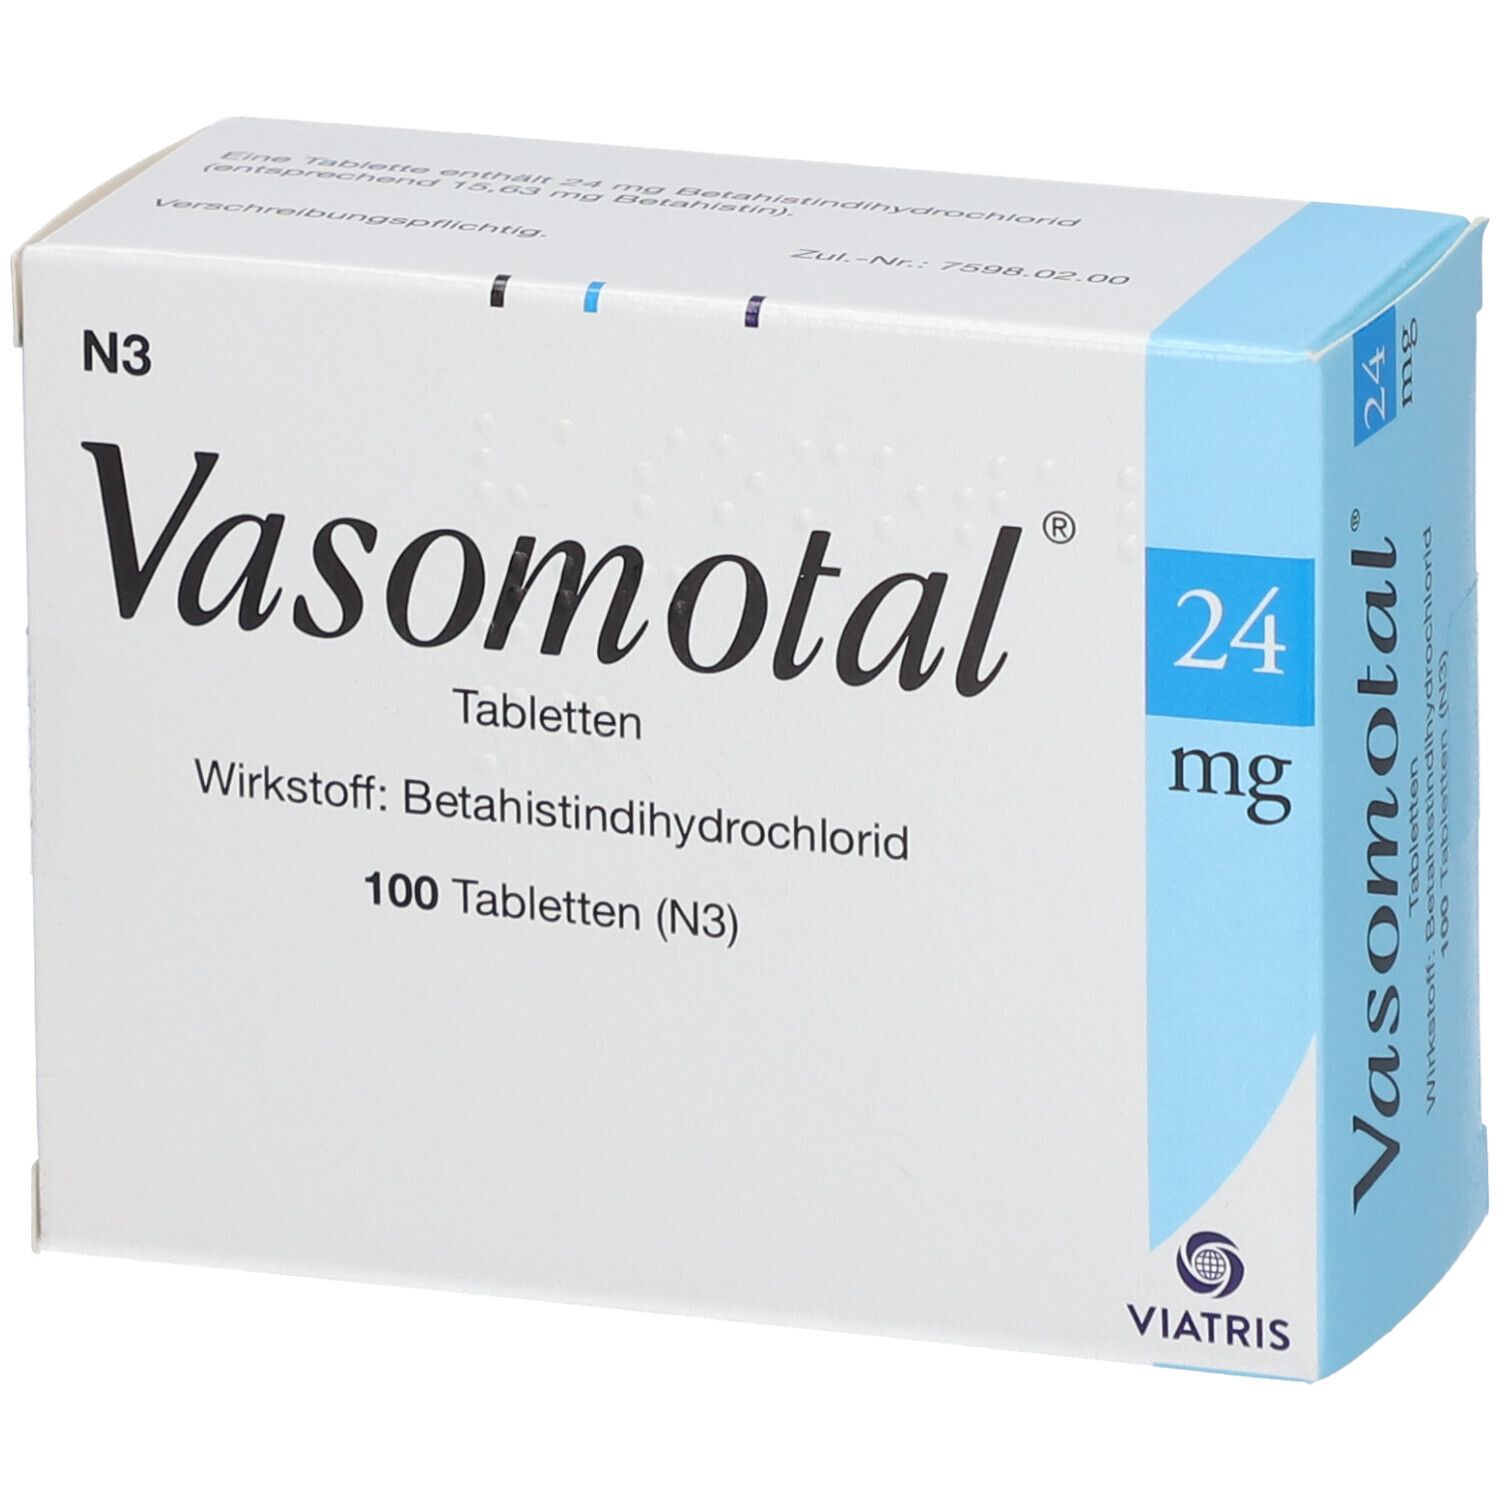 Vasomotal® 24 mg